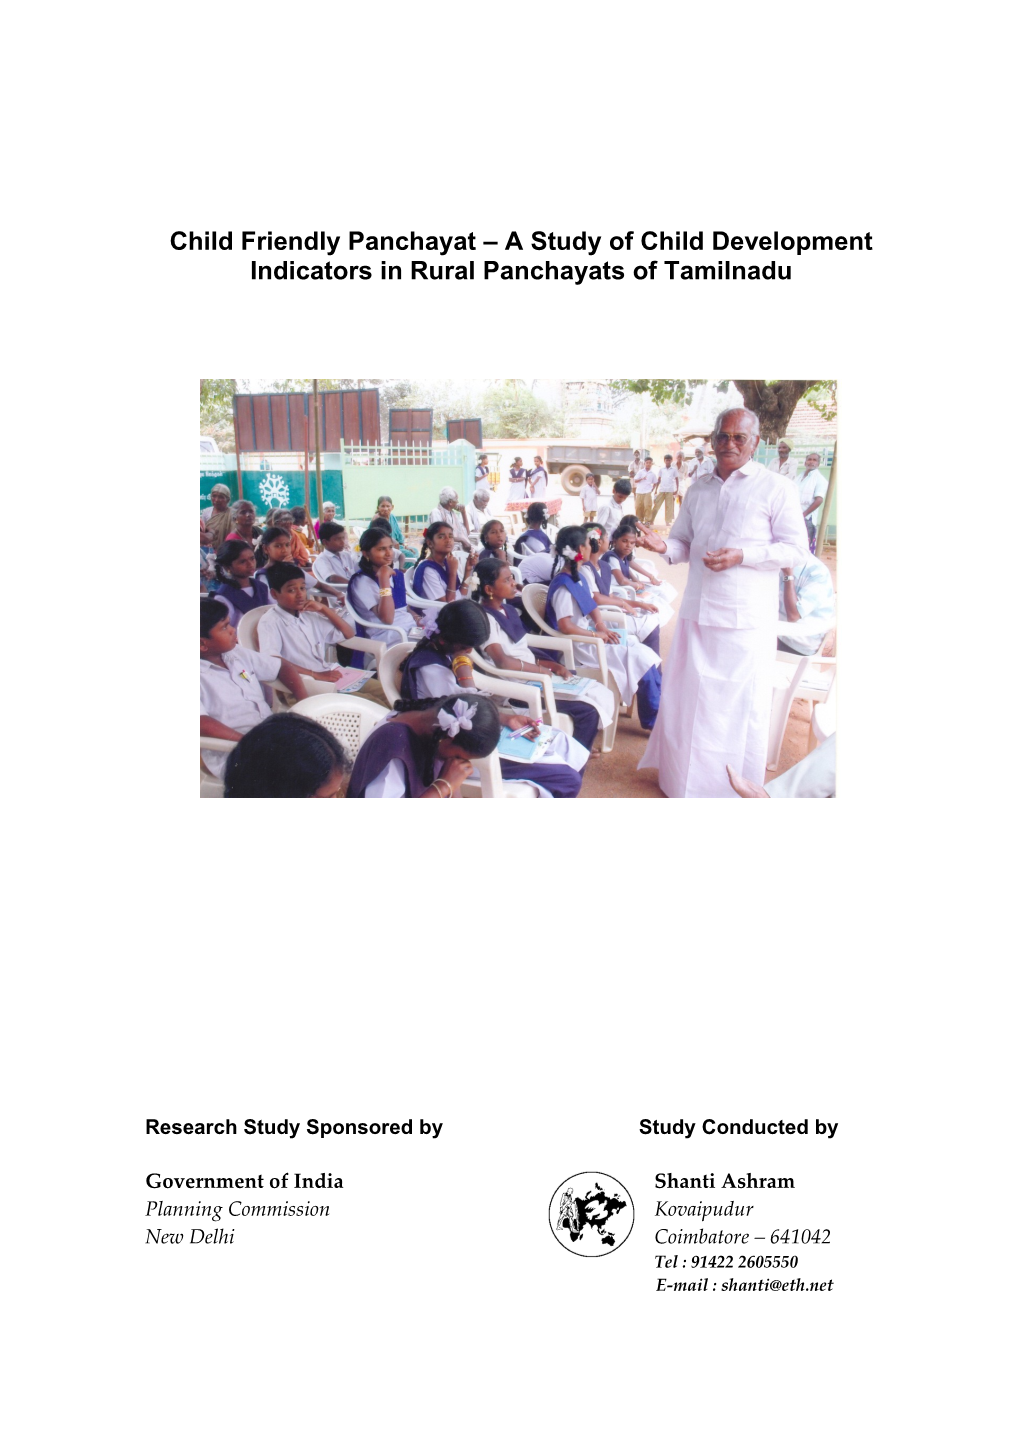 Child Friendly Panchayat a Study of Child Development Indicators in Rural Panchayat Of